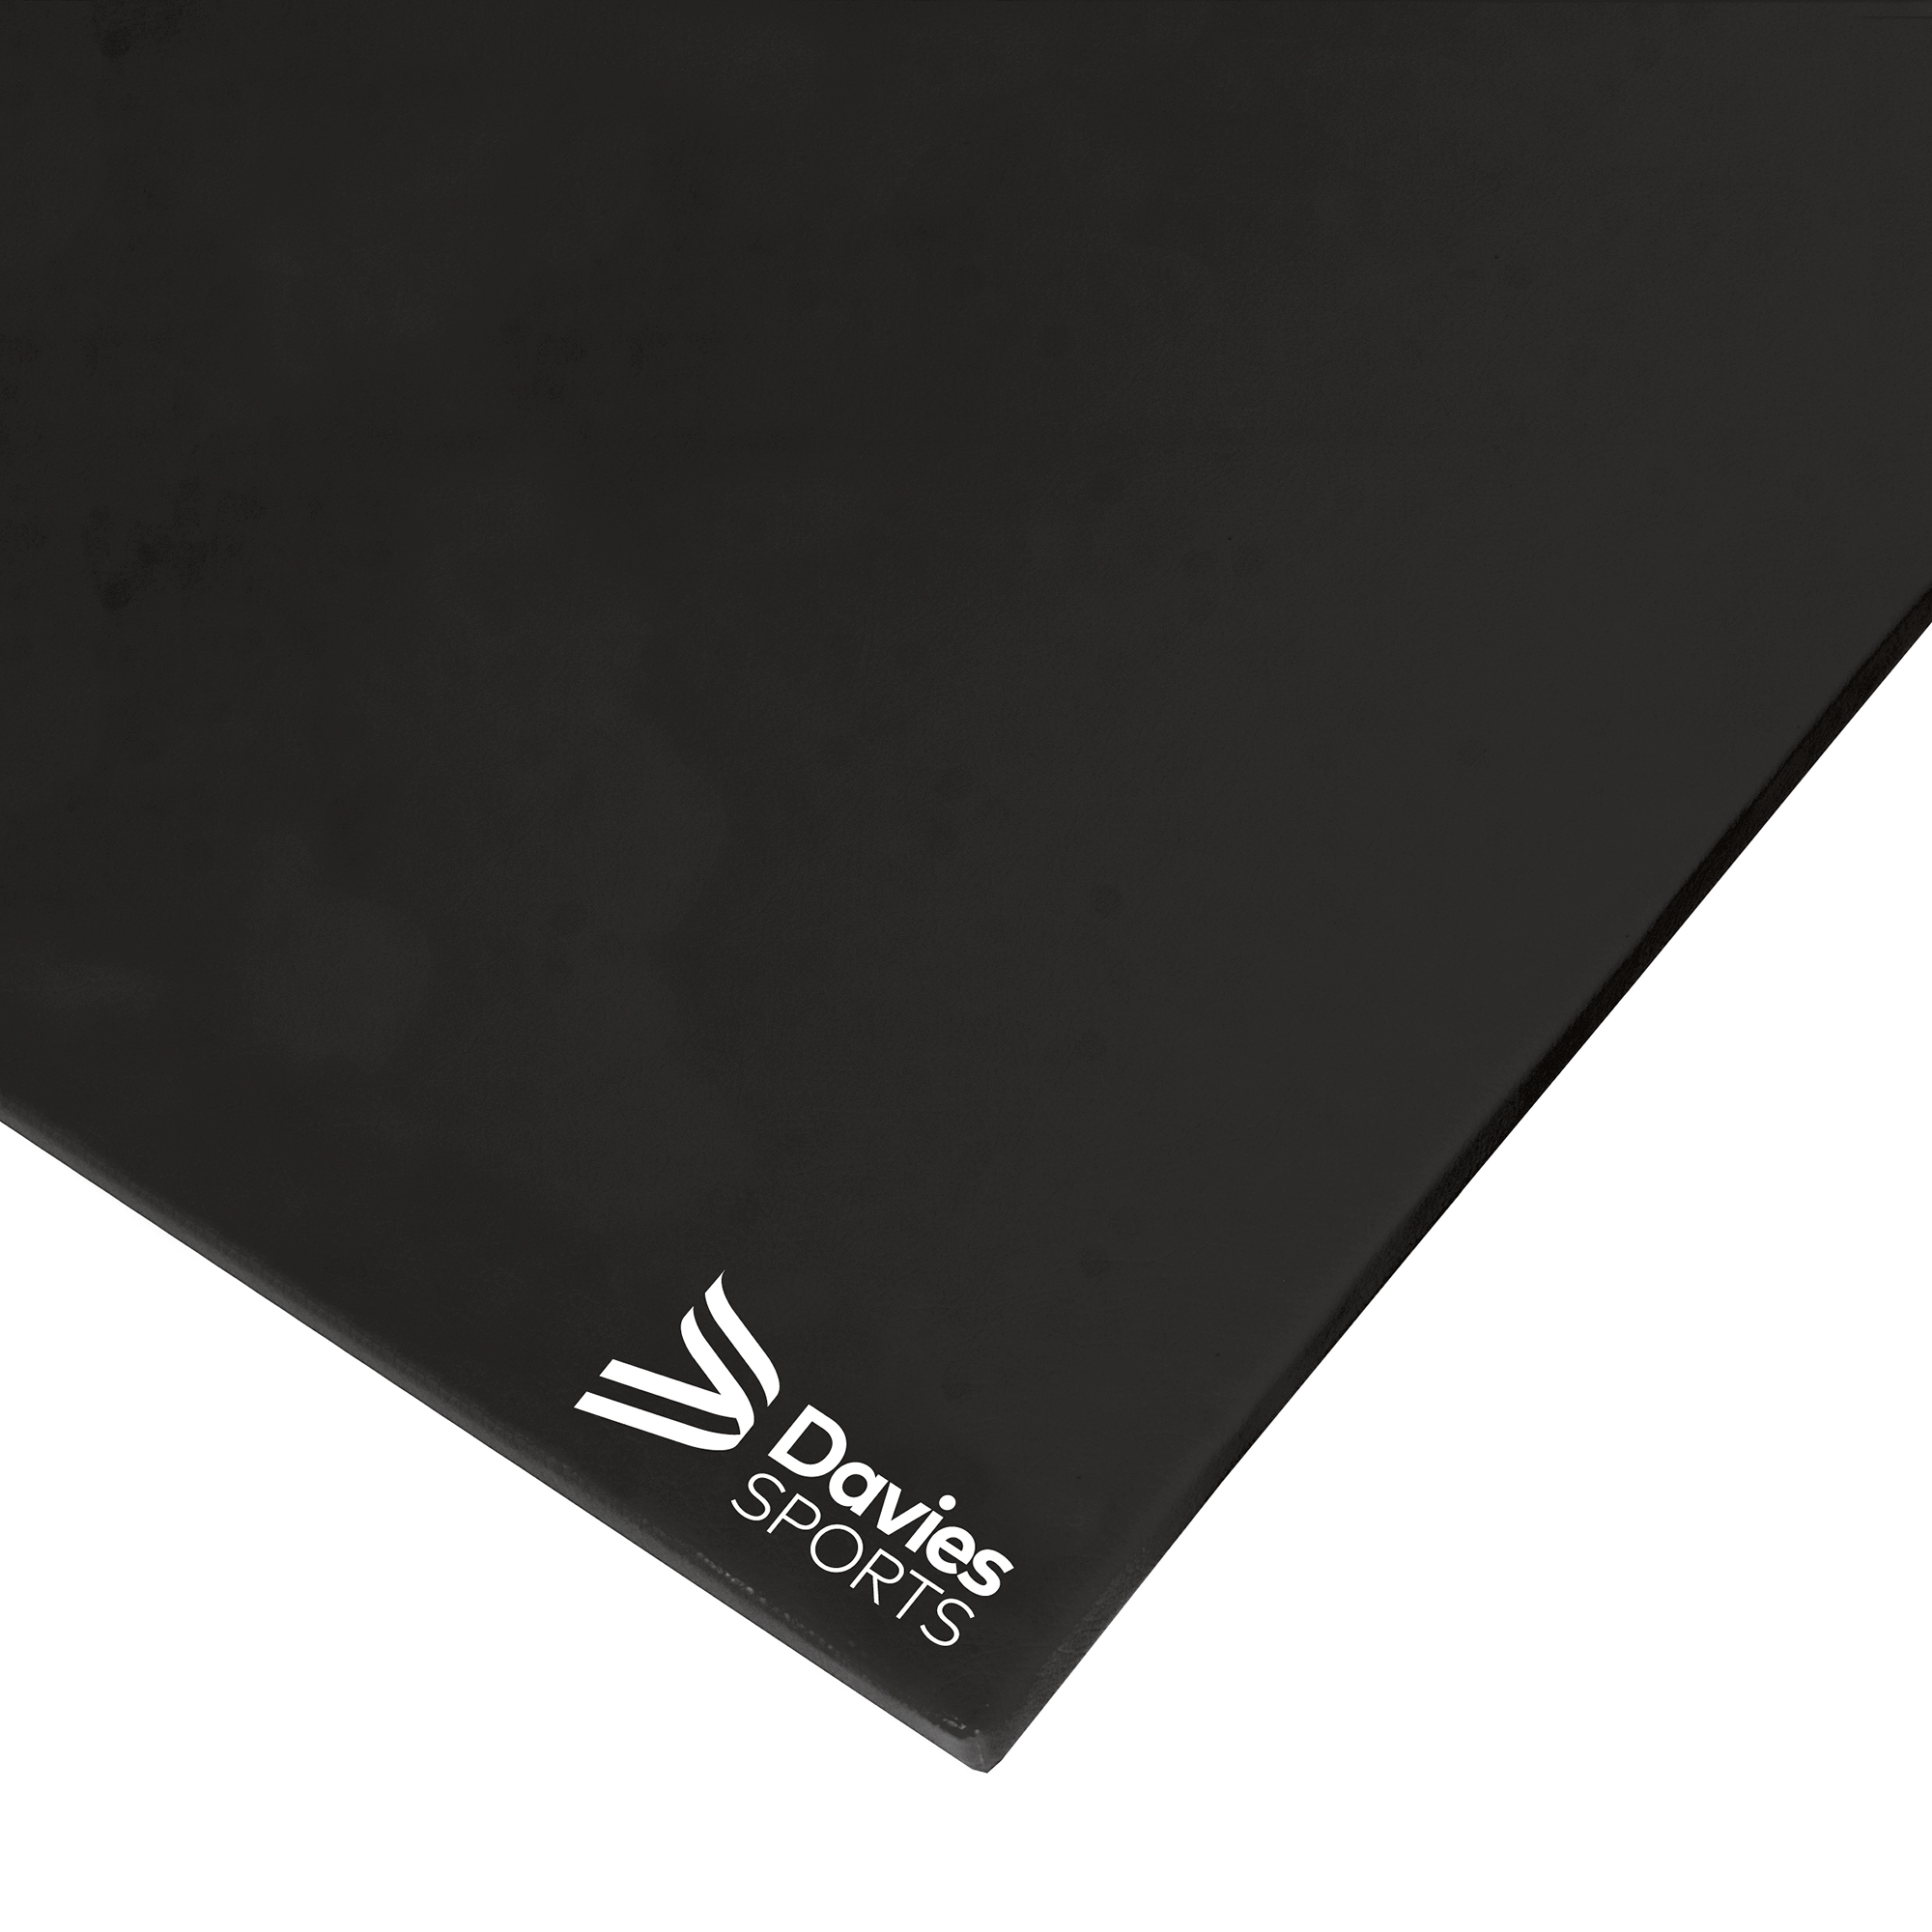 Davies Sports Medium Weight Gym Mat Standard Black - 1.83m x 1.22m x 32mm